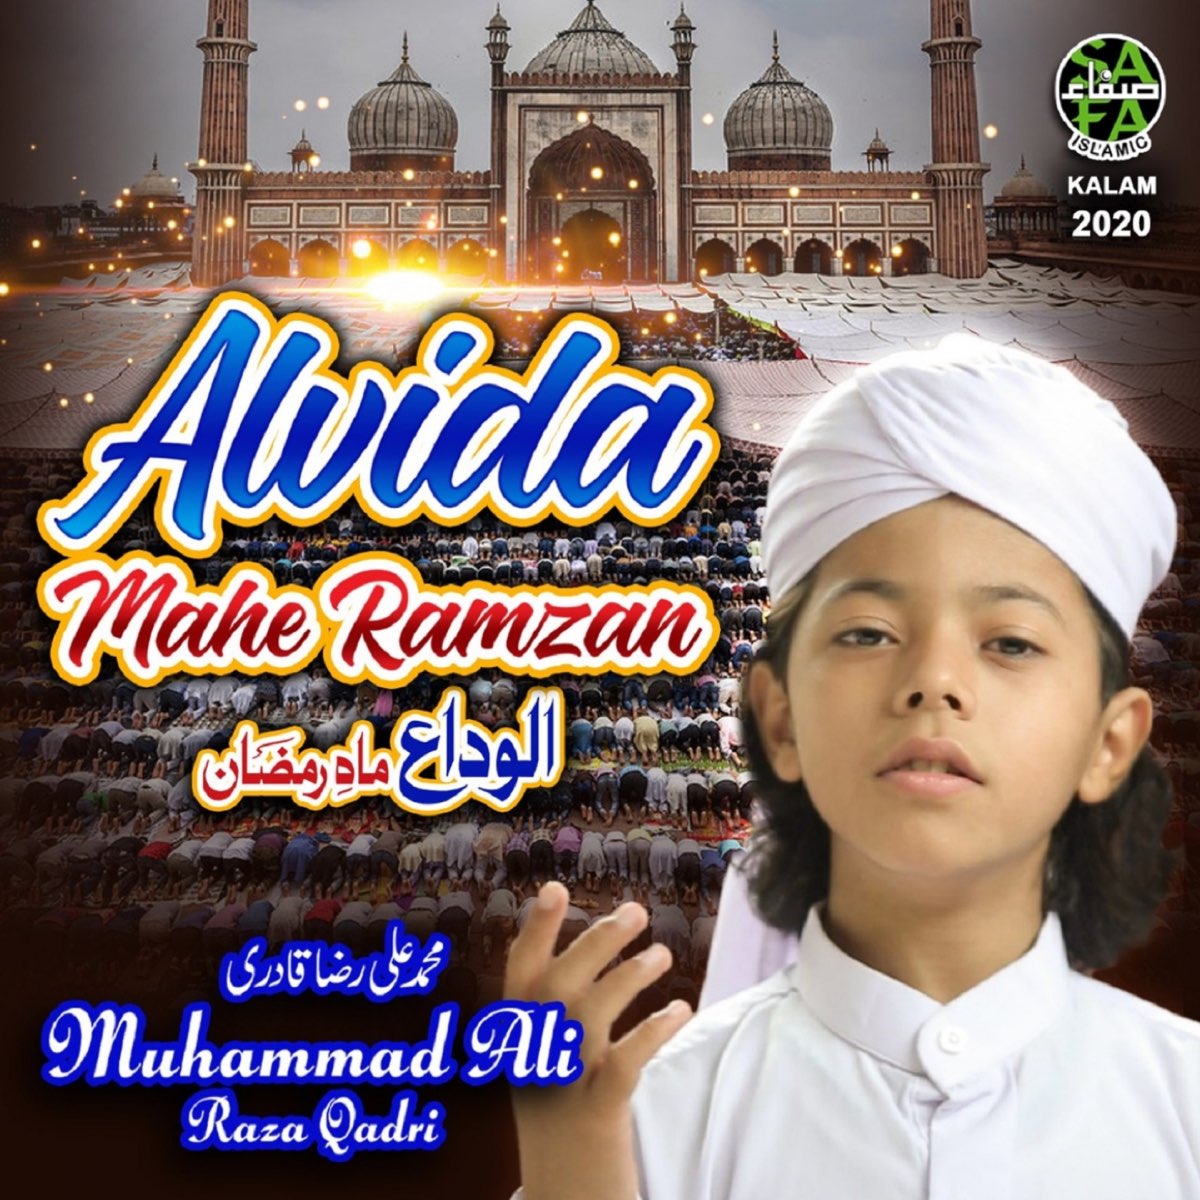 Alvida Mahe Ramzan - Single by Muhammad Ali Raza Qadri on Apple Music